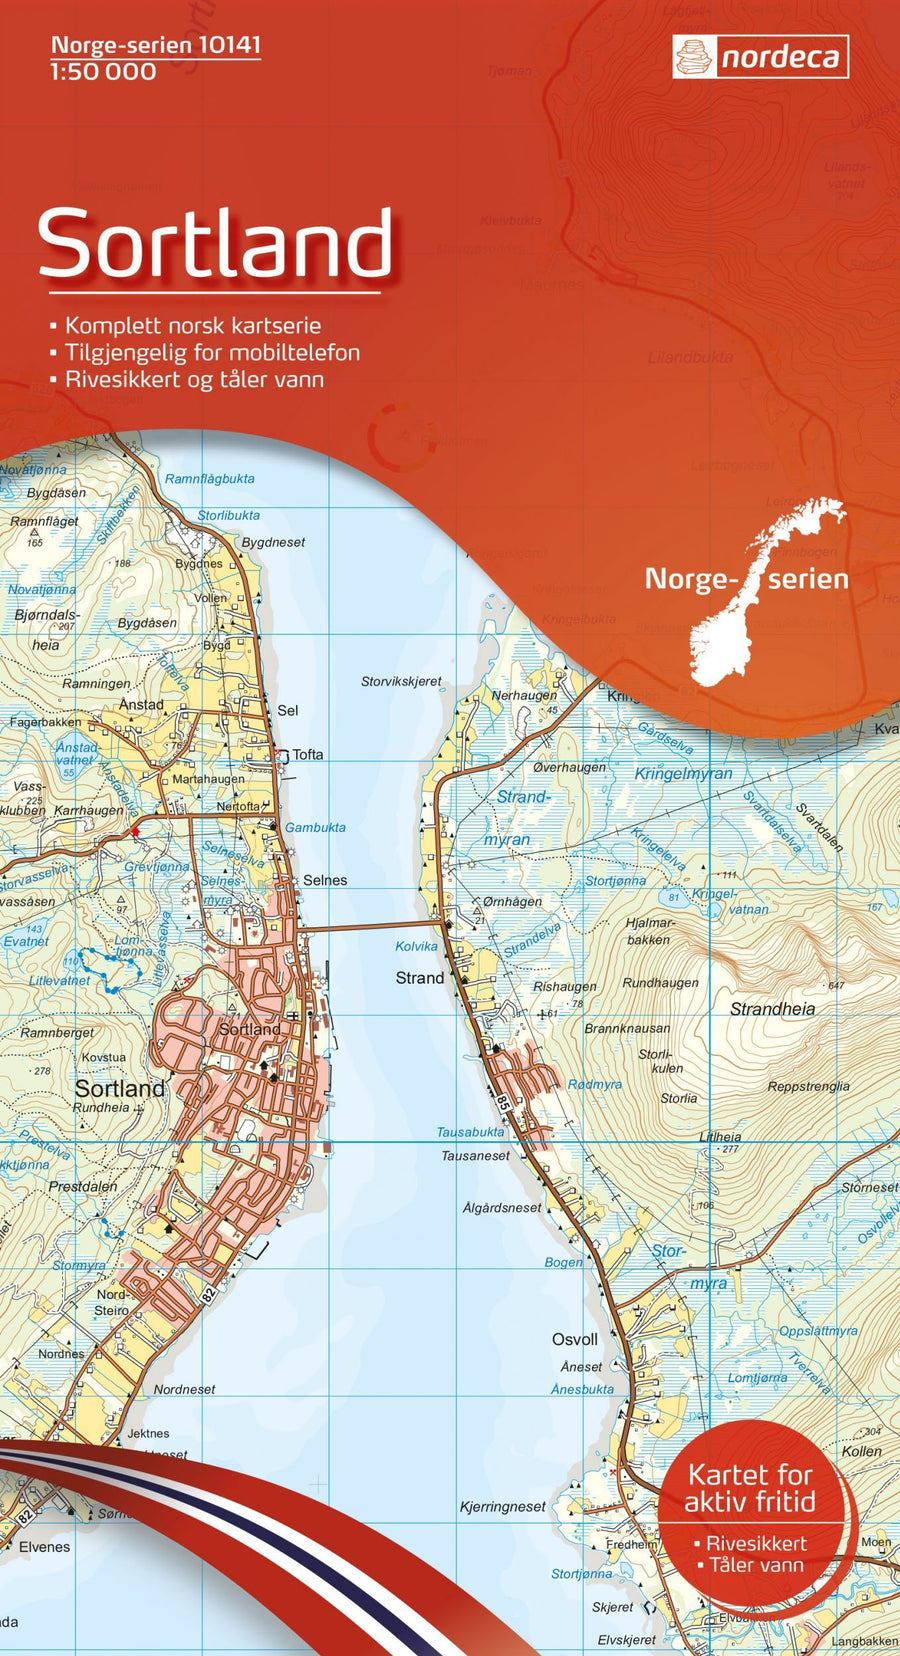 Carte de randonnée n° 10141 - Sortland (archipel des Vesterålen) (Norvège) | Nordeca - Norge-serien carte pliée Nordeca 